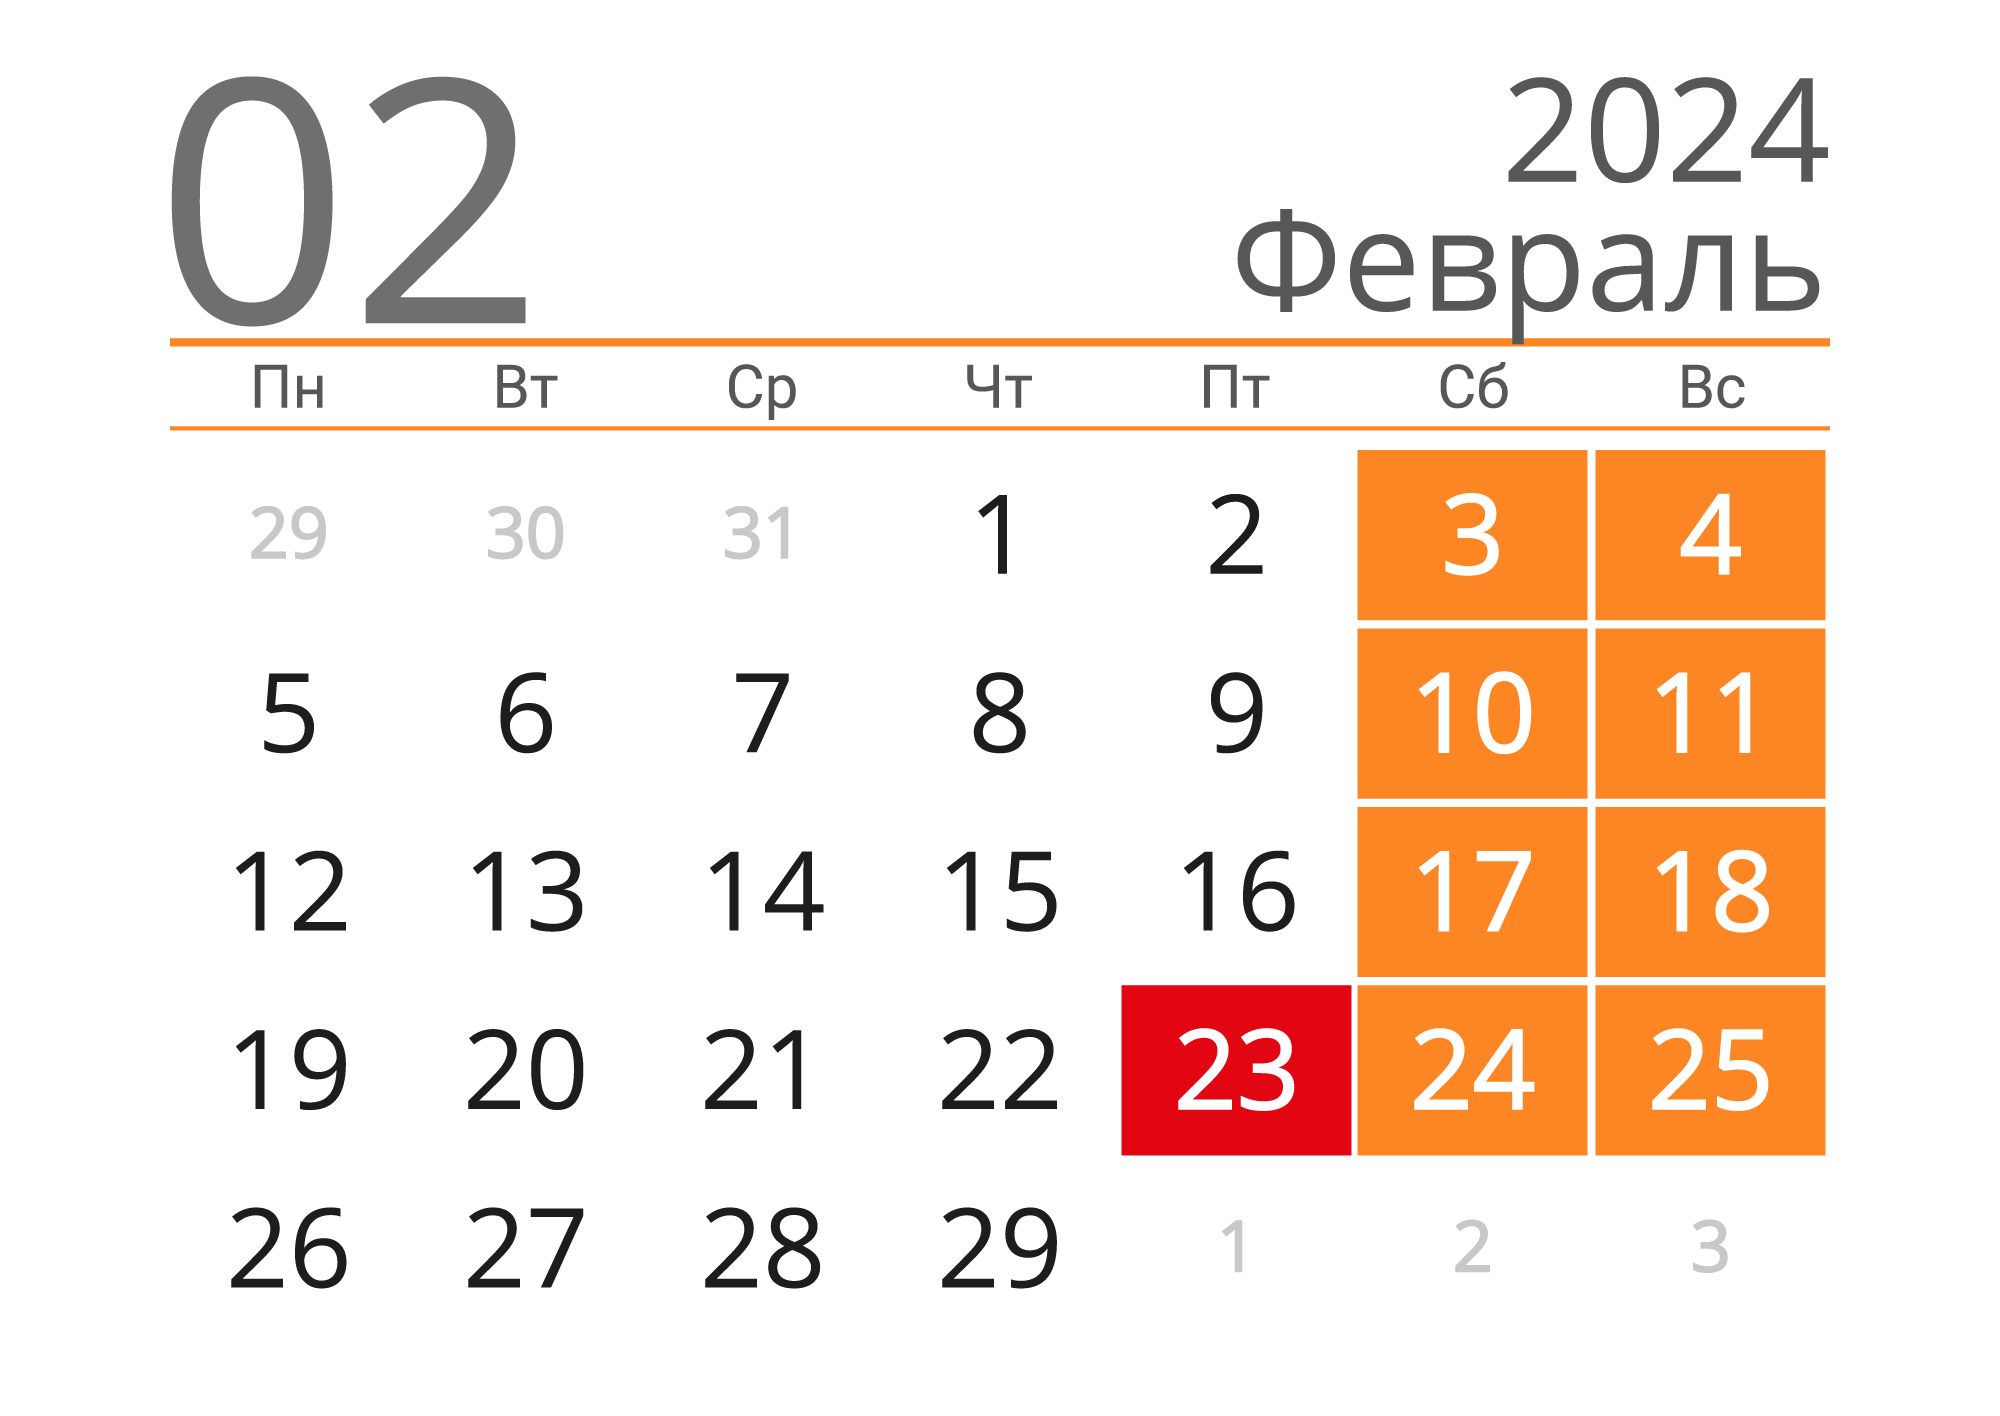 Календарь на весну 2024 года. Календарь сентябрь 2022. Календарь июль 2021. Календарь июнь 2022. Календарь август 2022 красивый.